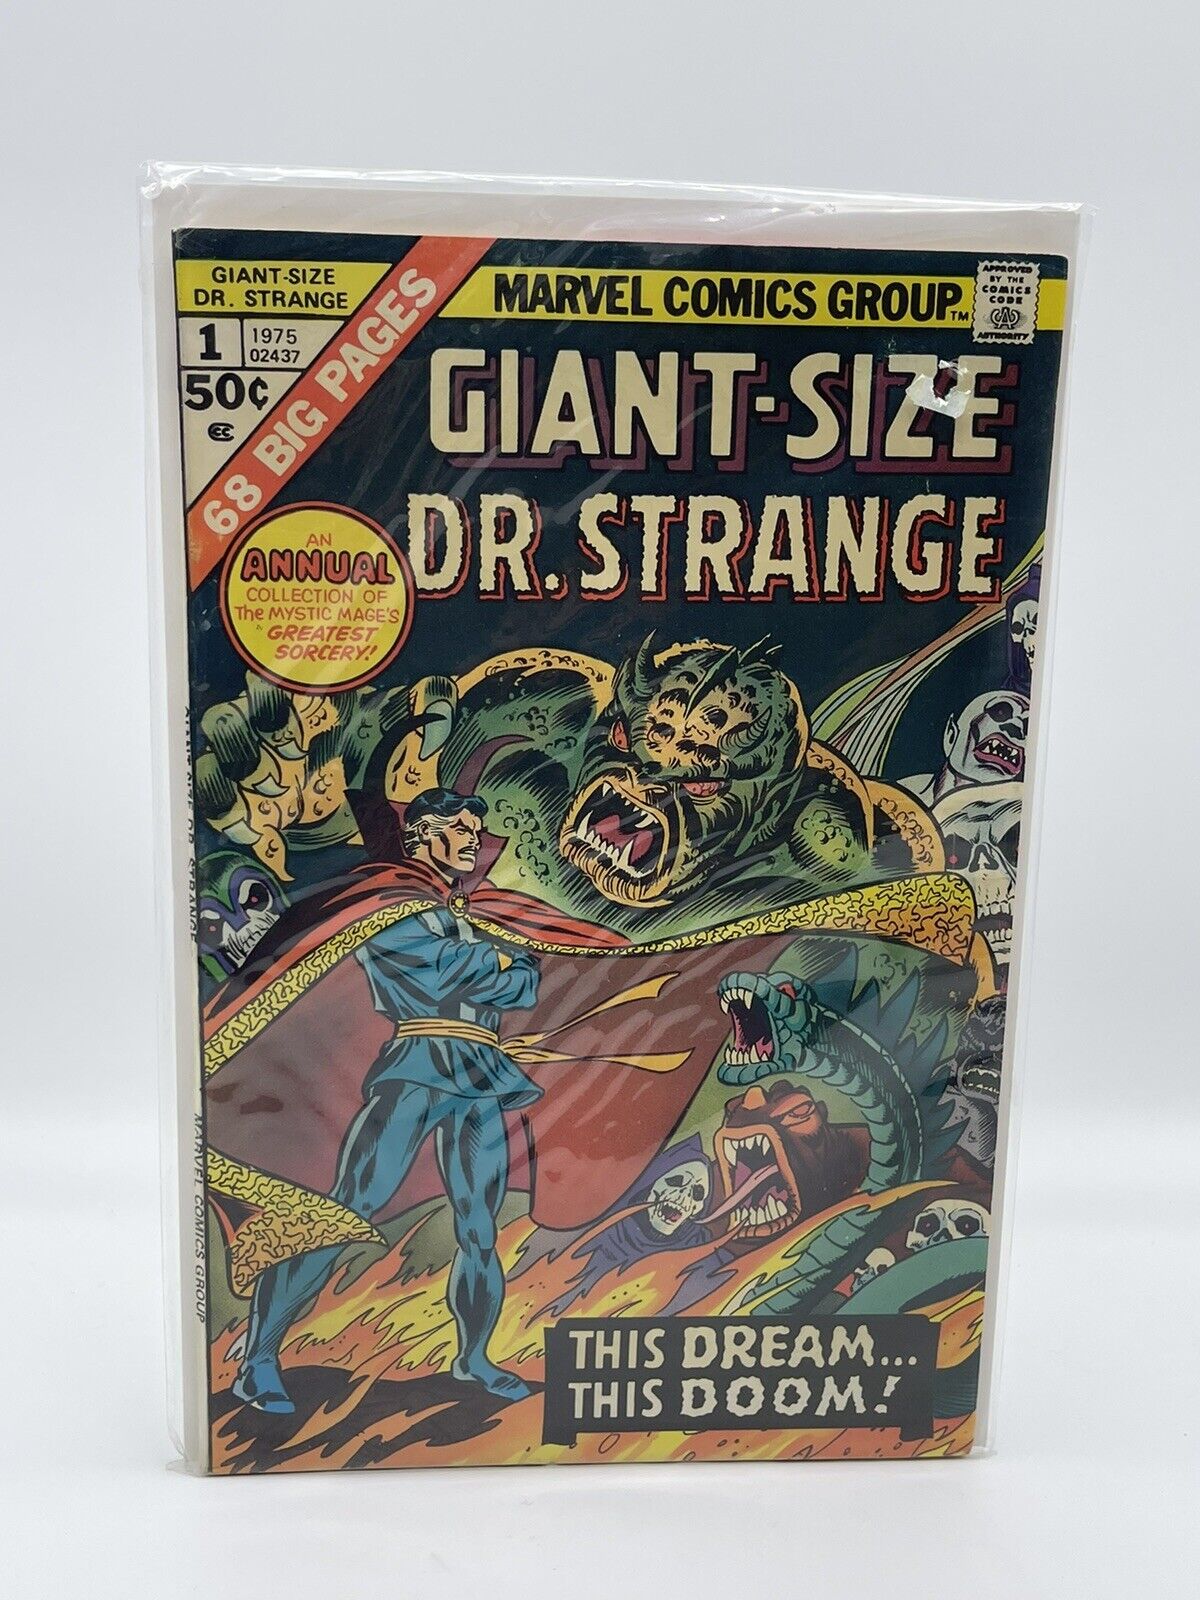 Marvel Comics 1975 Giant Size Dr. Strange #1 This Dream This Doom Comic Book